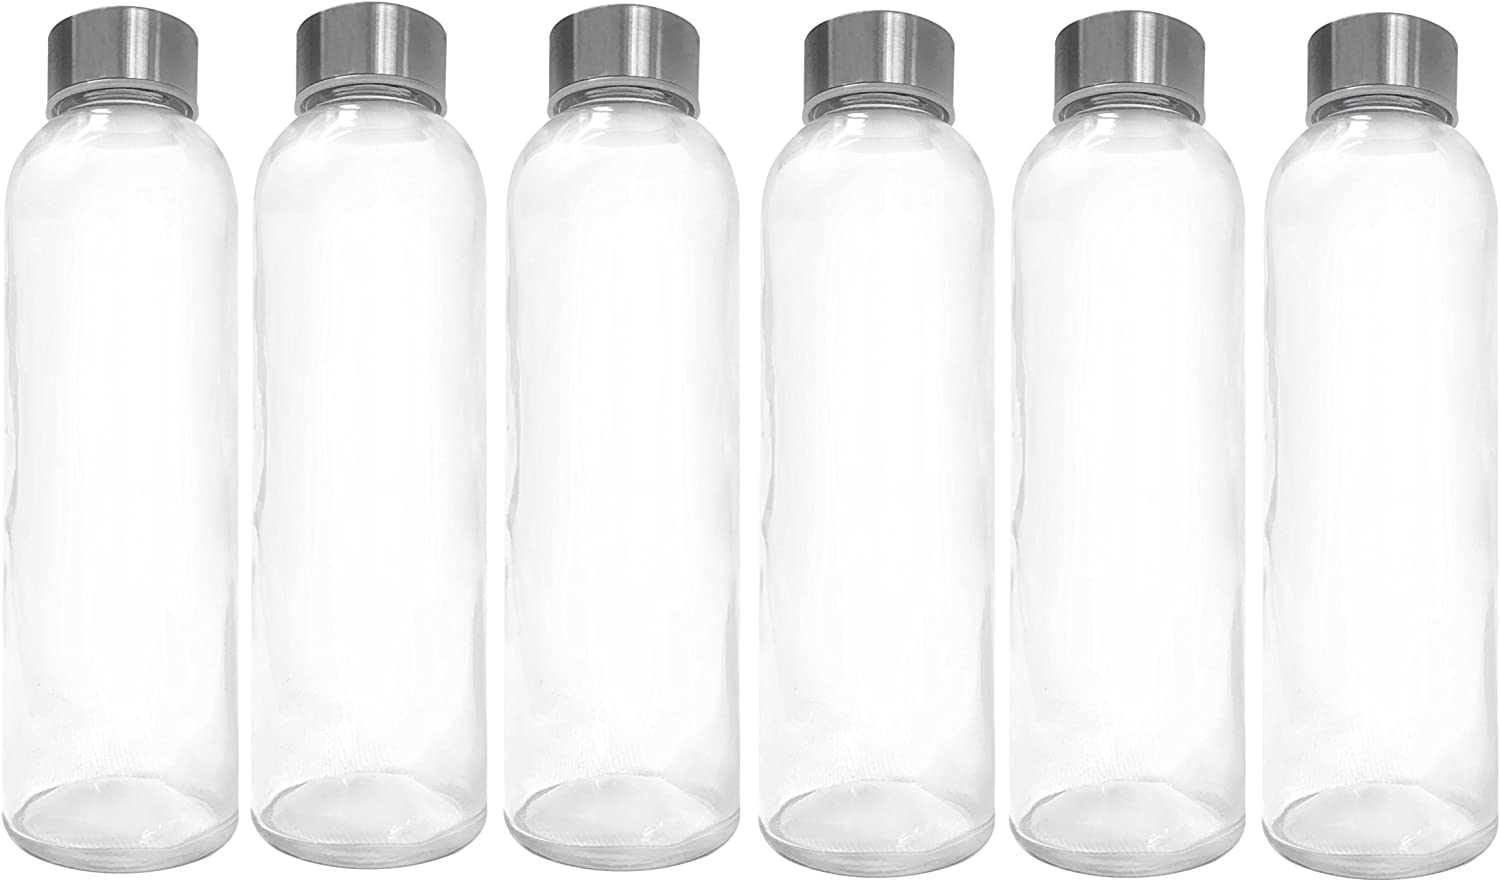 Ewei's Homeware 6 Pack - 18oz Leak-Proof Juice Containers, Glass Water Beverage Bottles